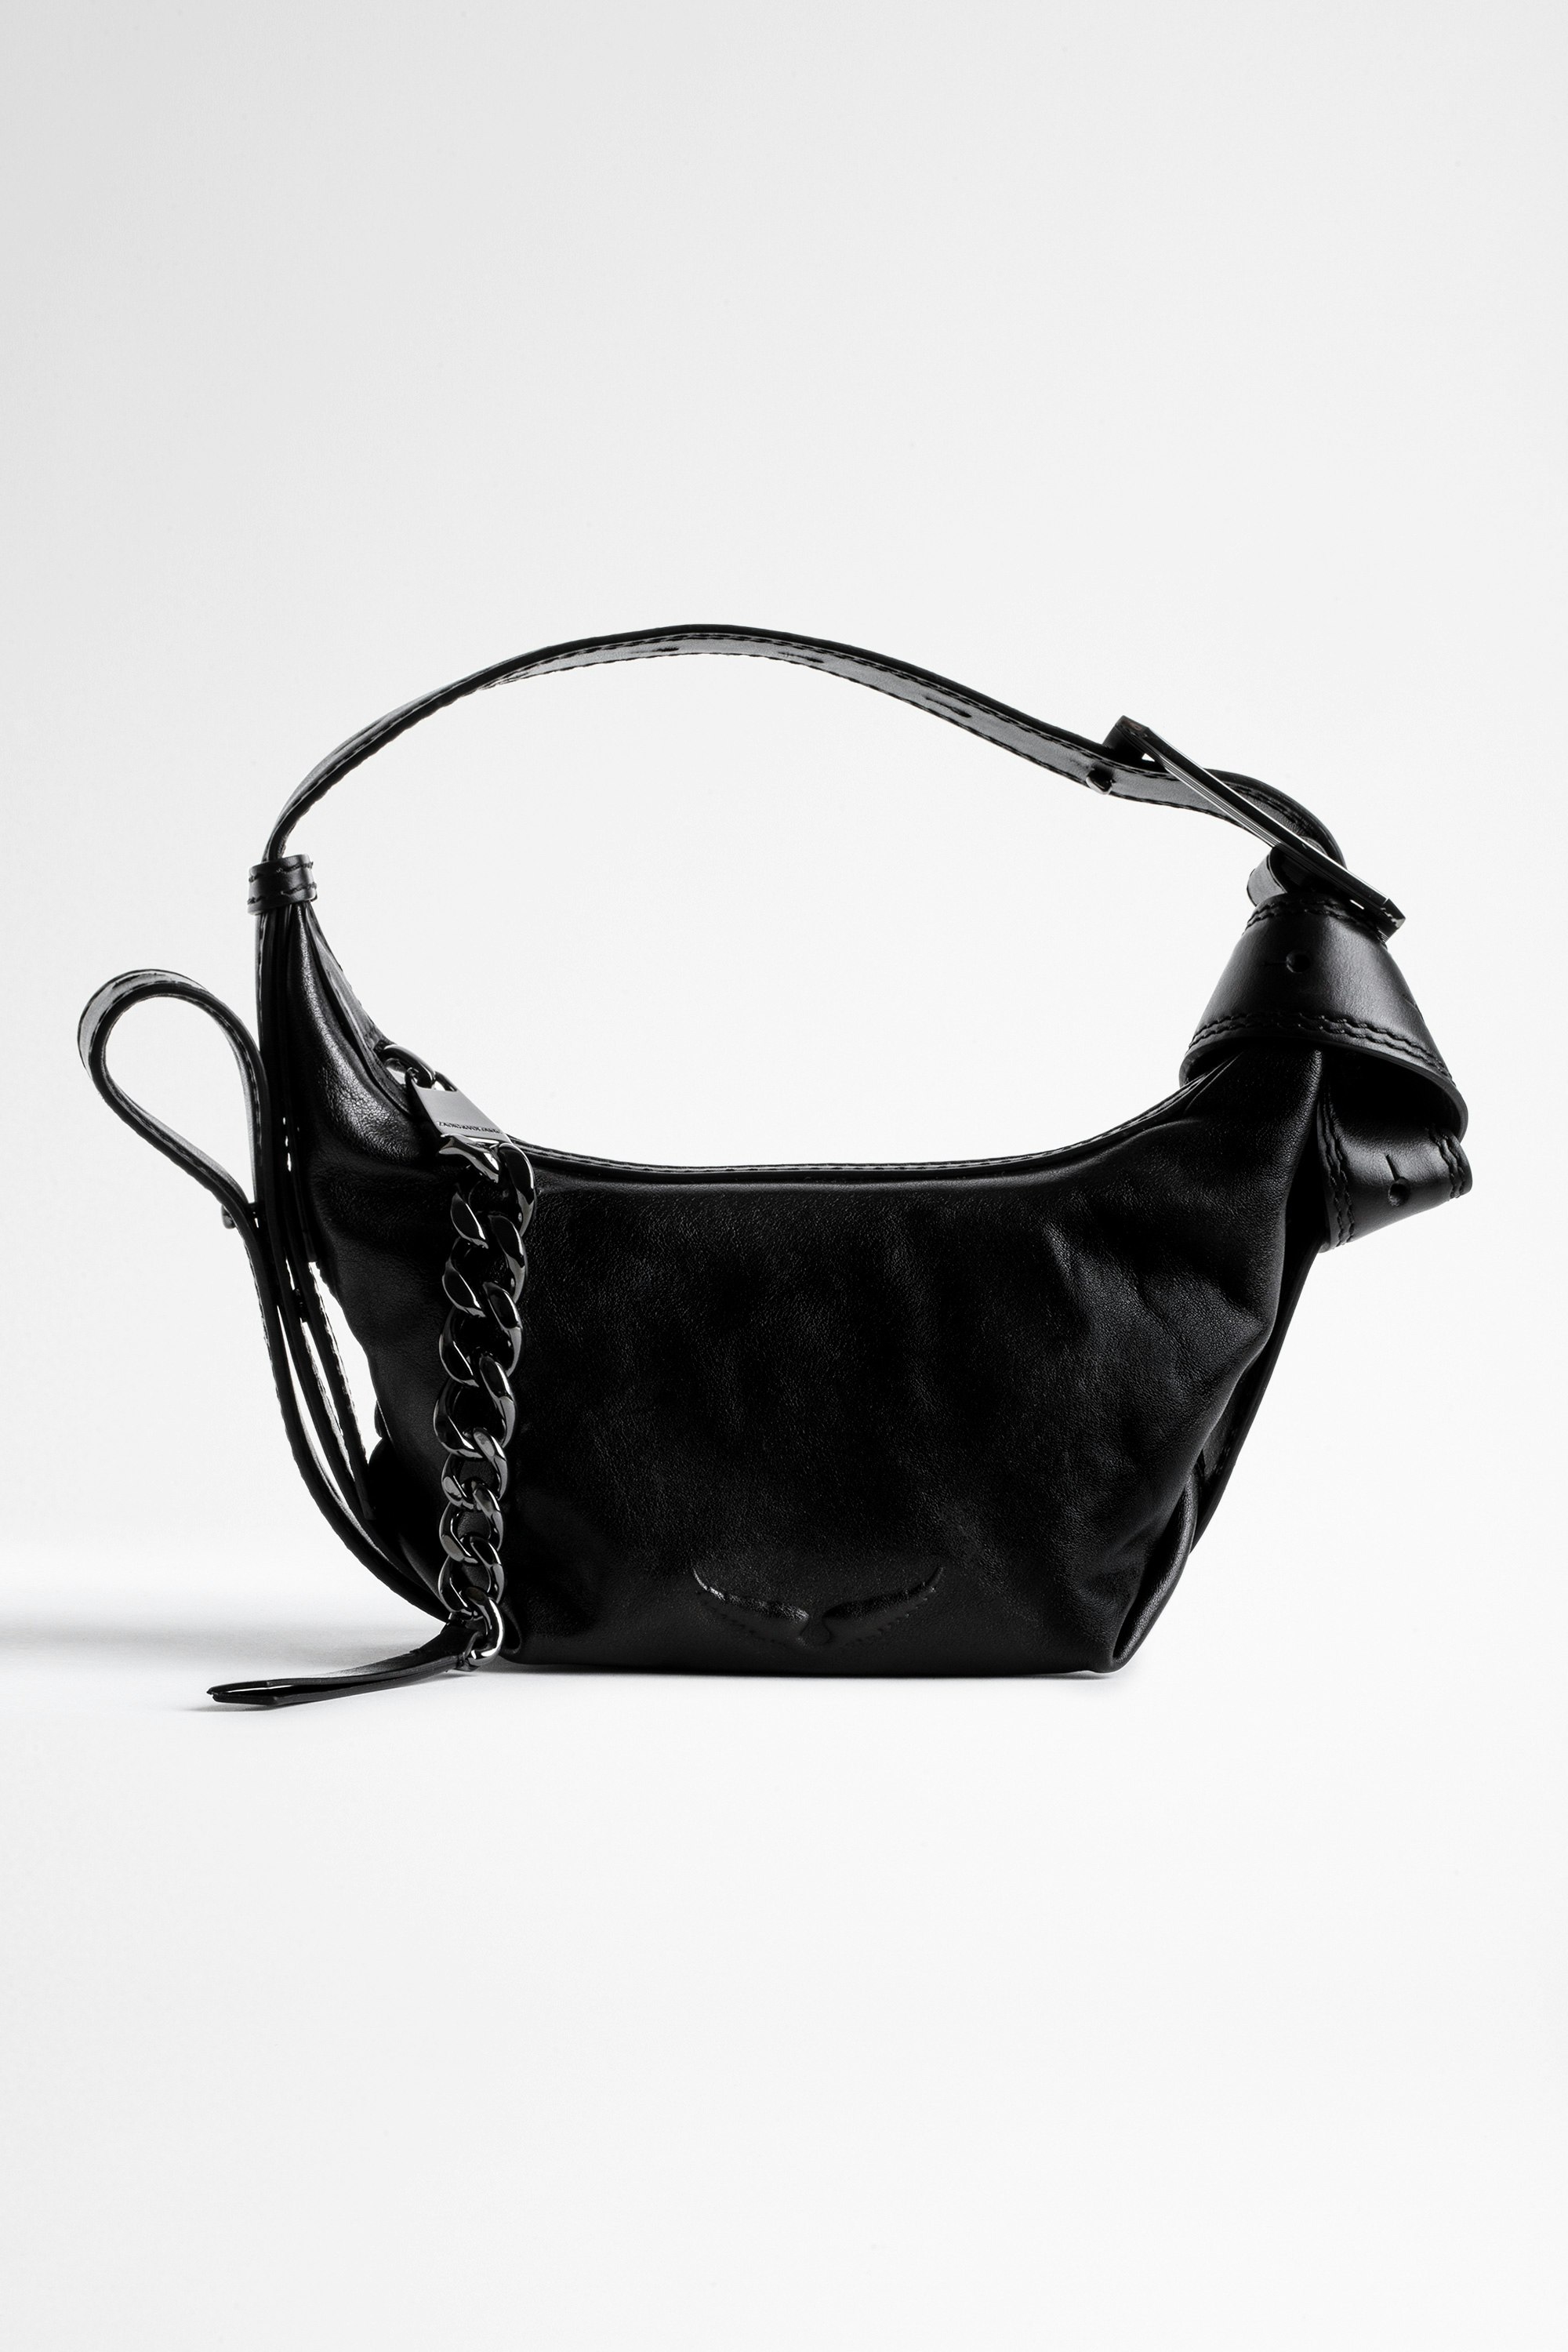 Le Cecilia XS Bag - Le Cecilia XS bag in black vegetable tanned leather.